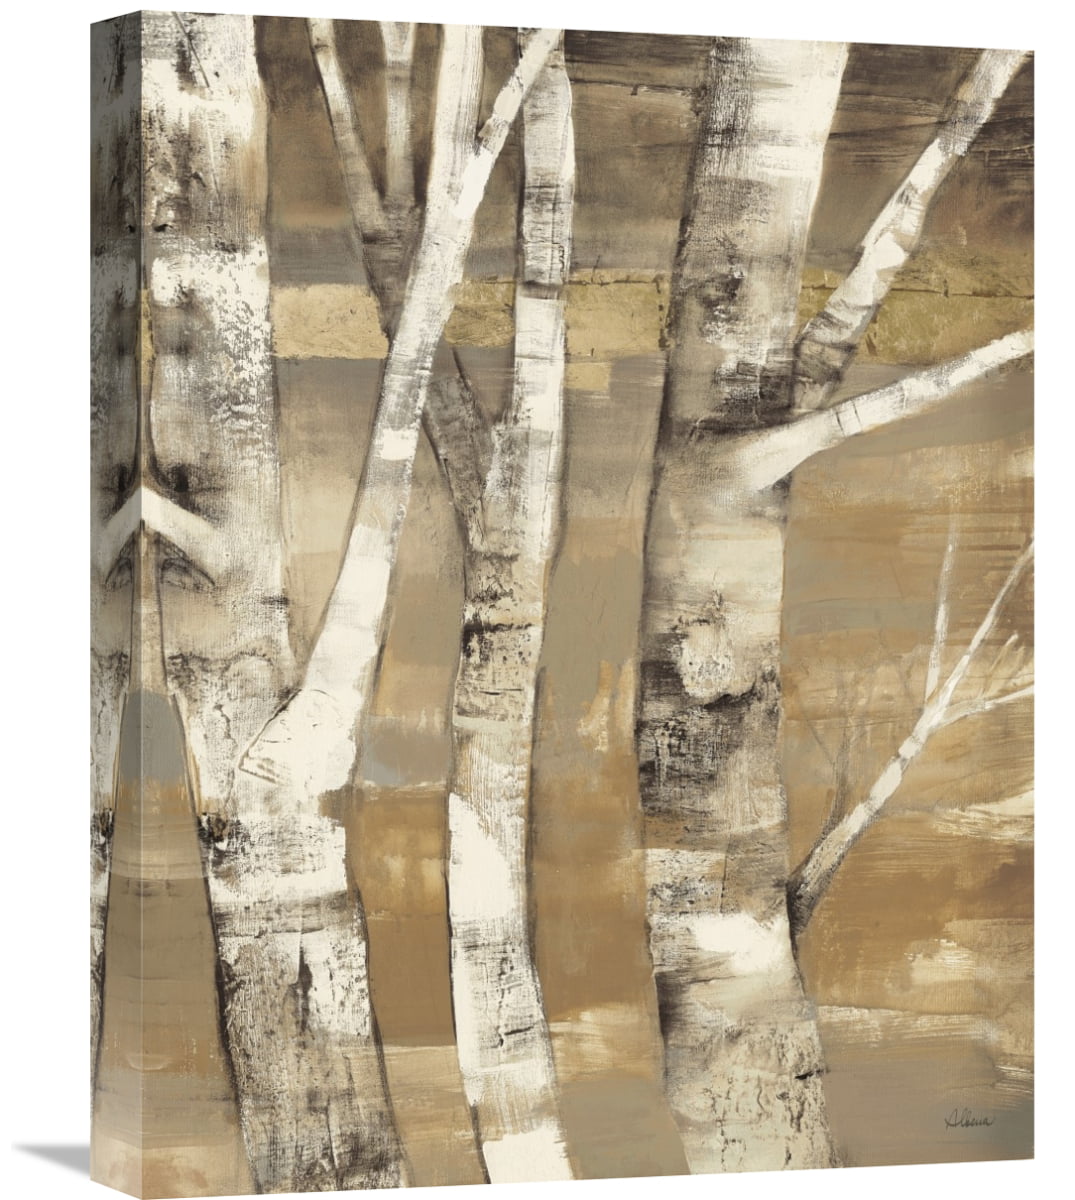 Global GalleryAlbena Hristova Wandering Through The Birches I Giclee Stretched Canvas Artwork 20 x 24 